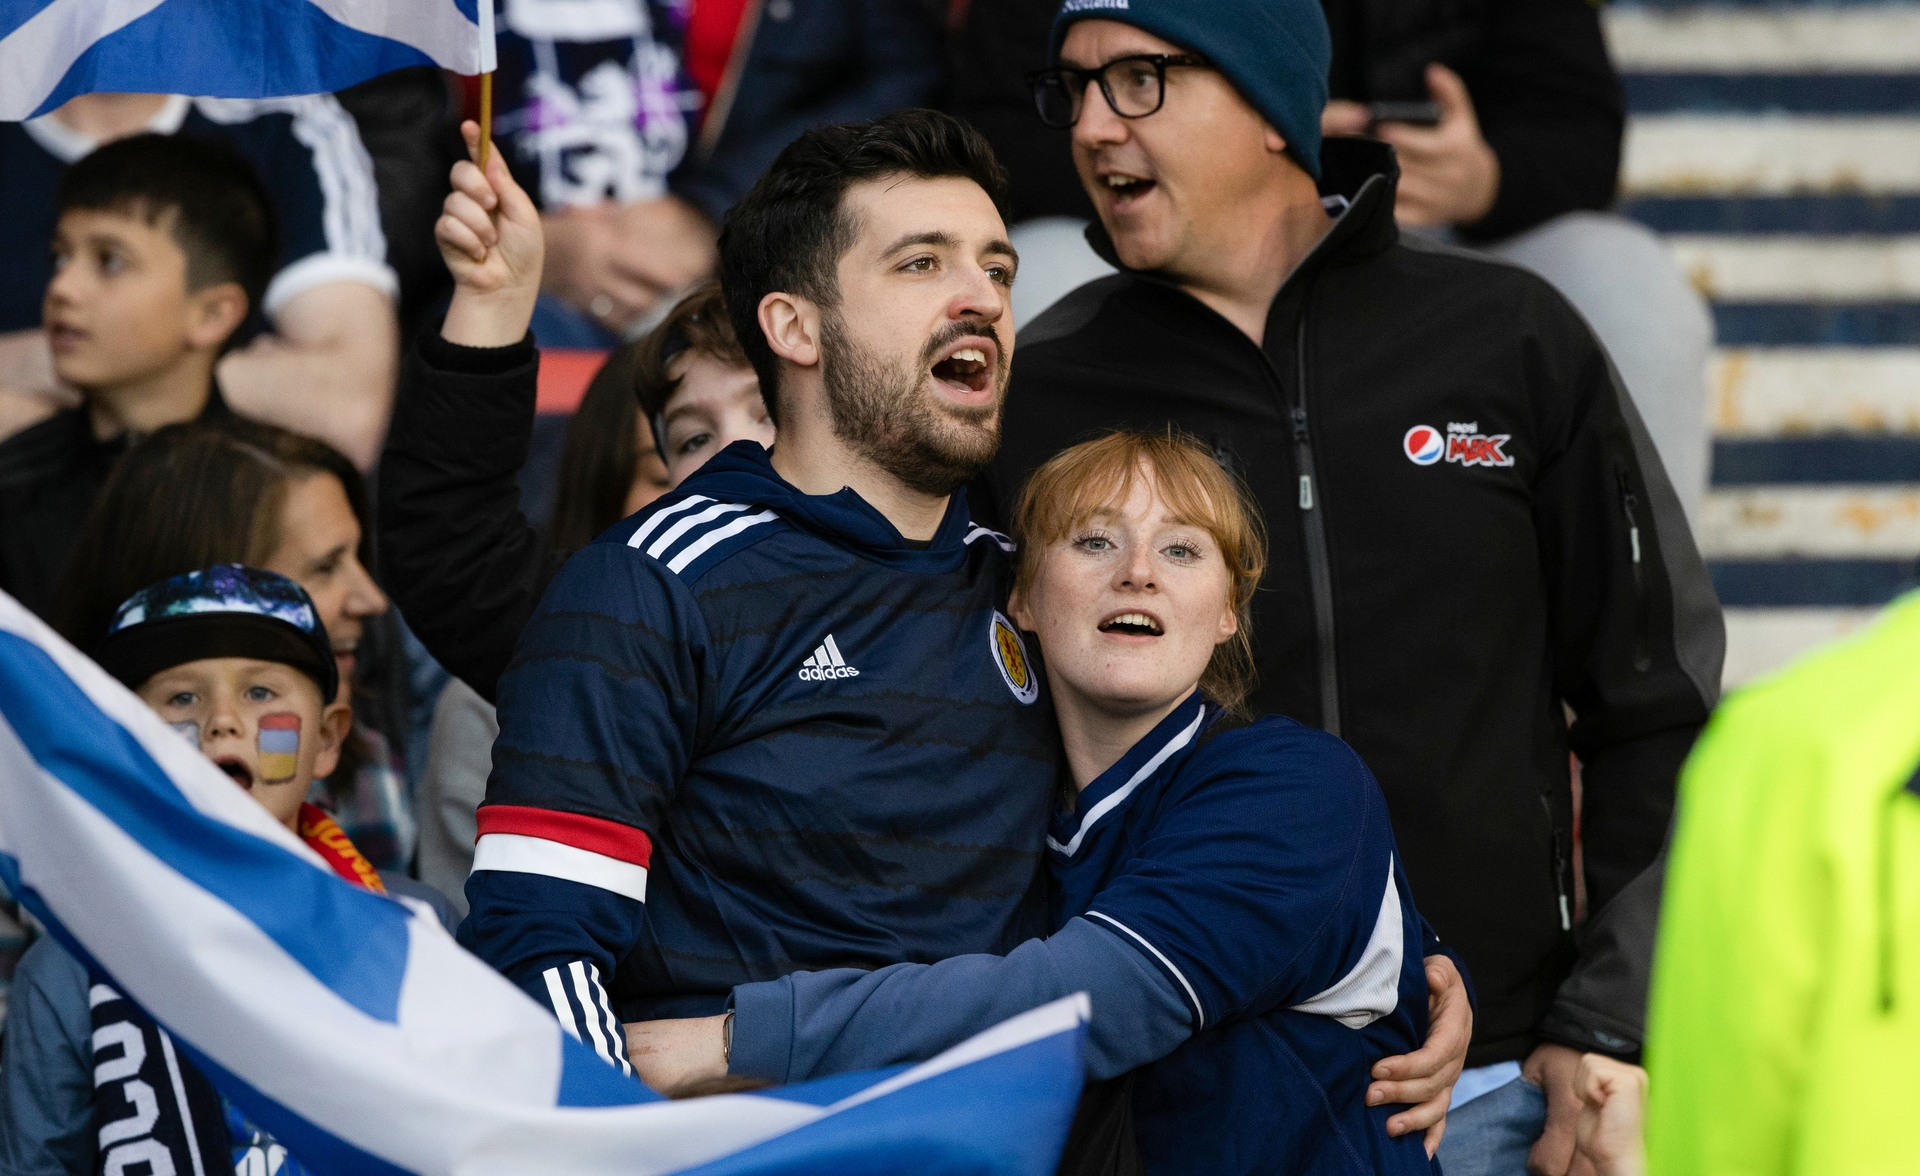 Scotland fans enjoyed a routine 2-0 win at Hampden.